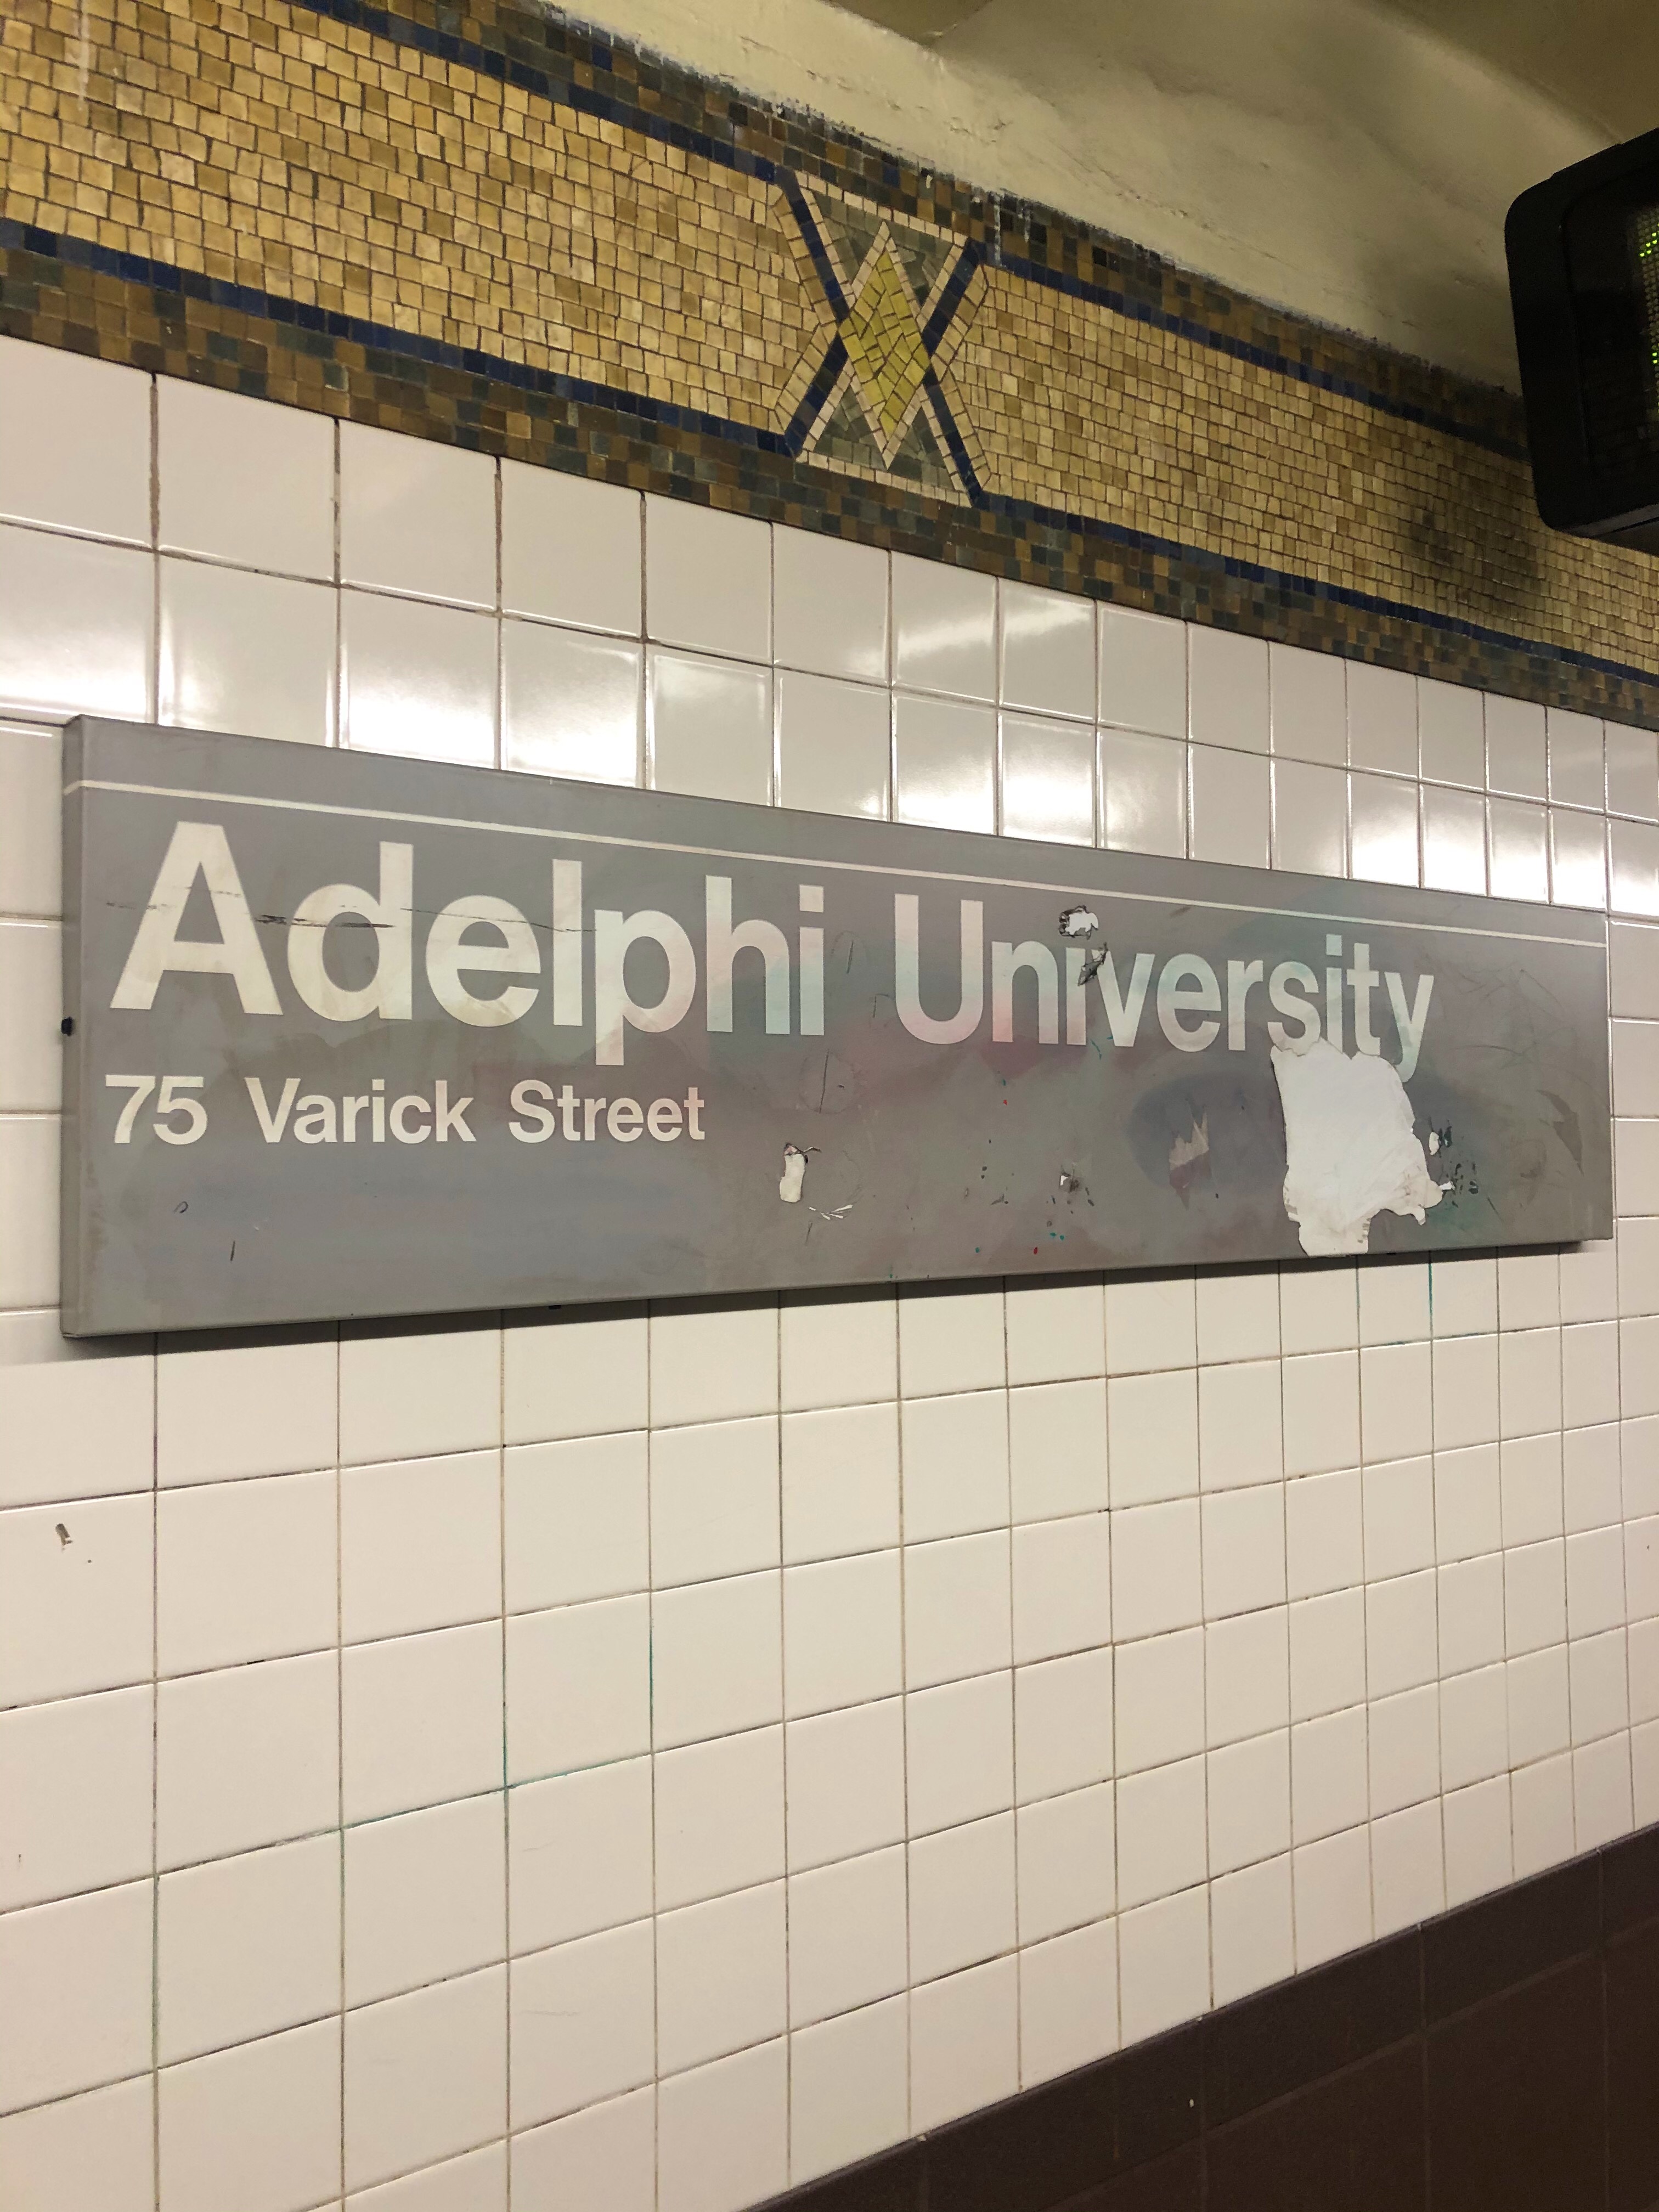 Subway sign that says "Adelphi University 75 Varick Street"